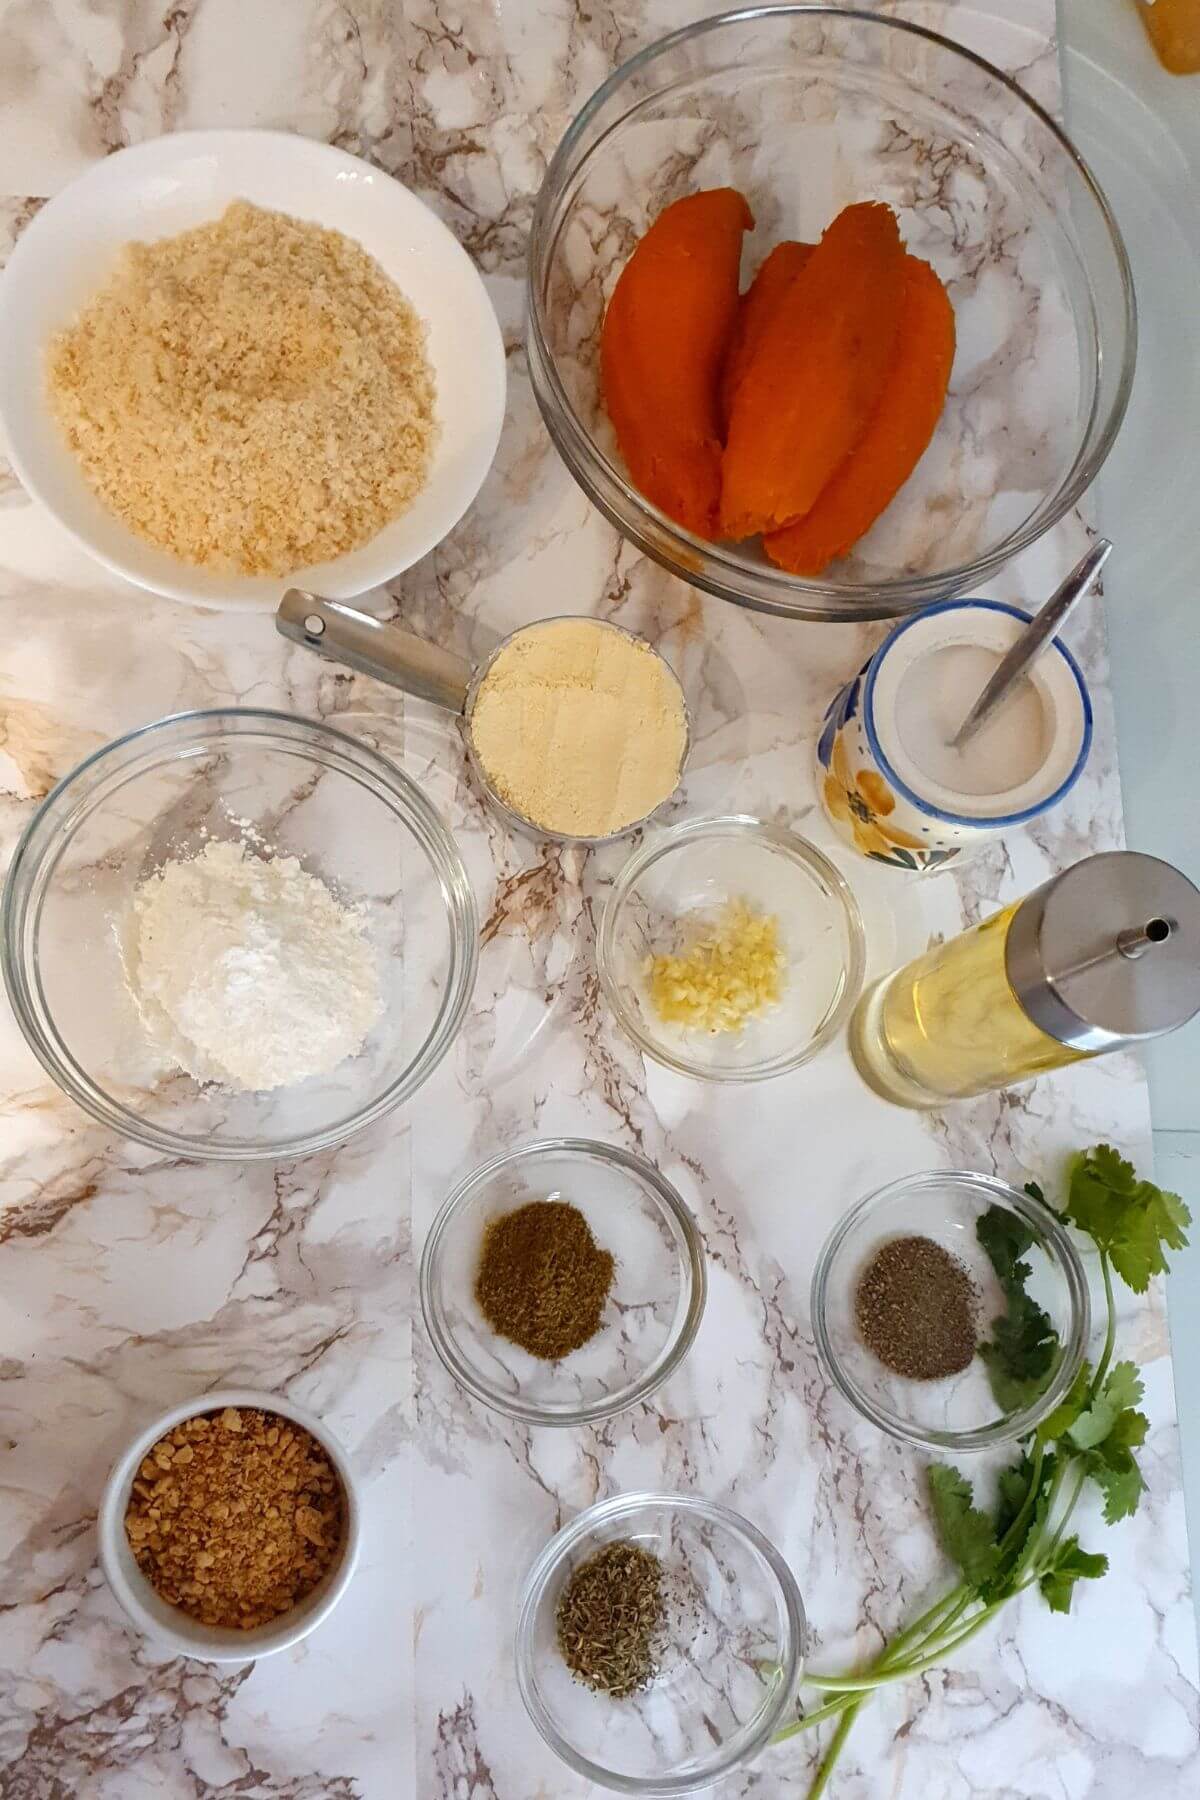 ingredients for making patties